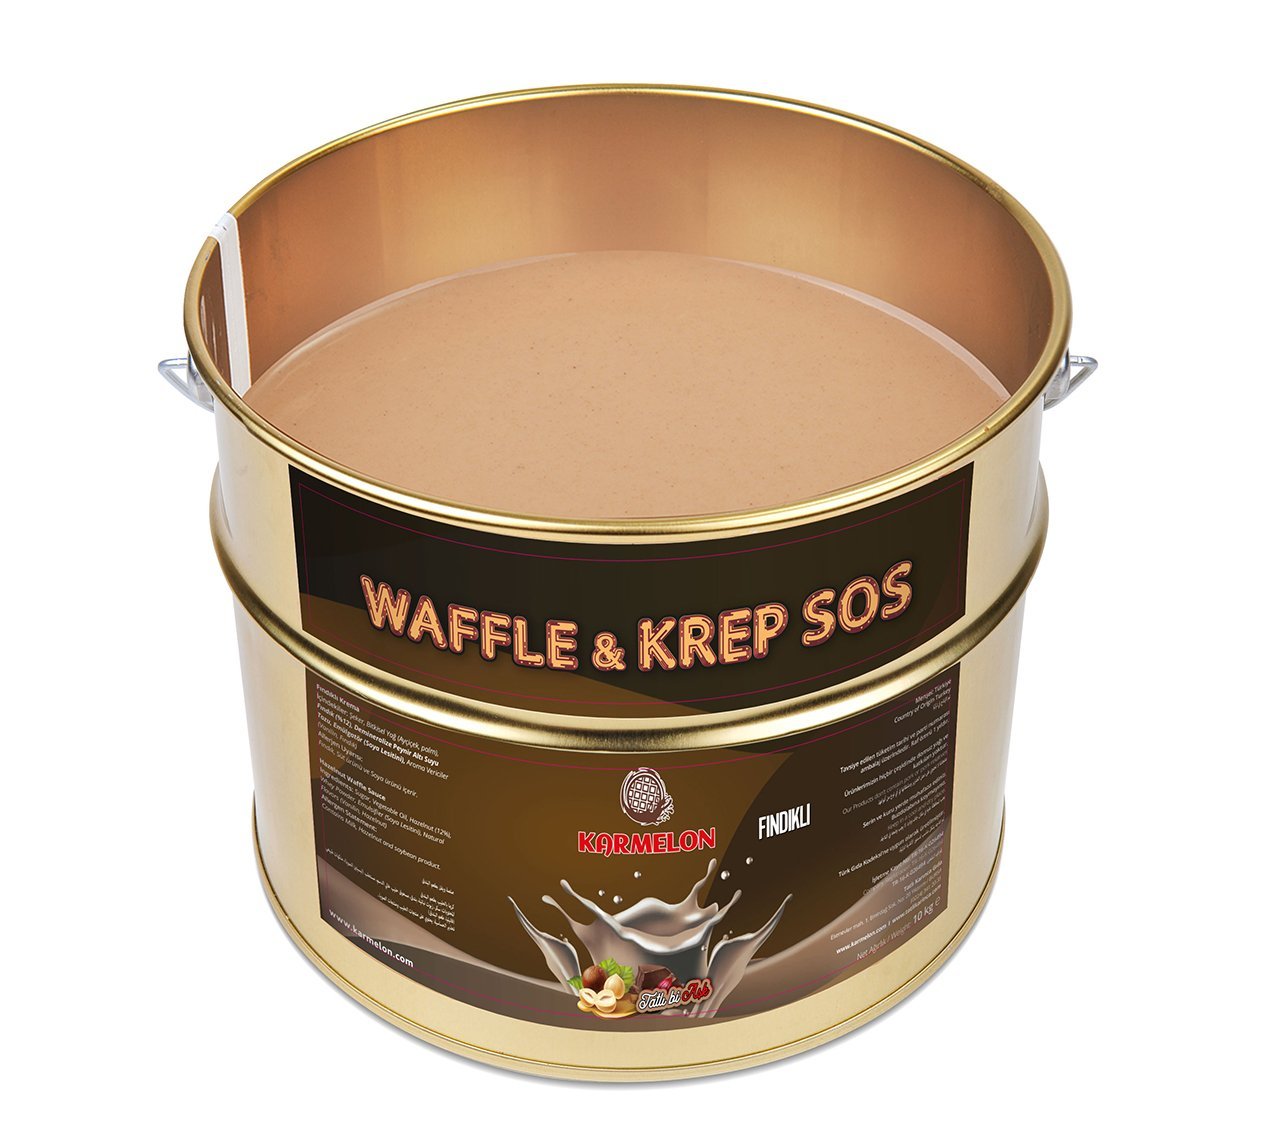 Fındıklı Waffle Sos - 6kg